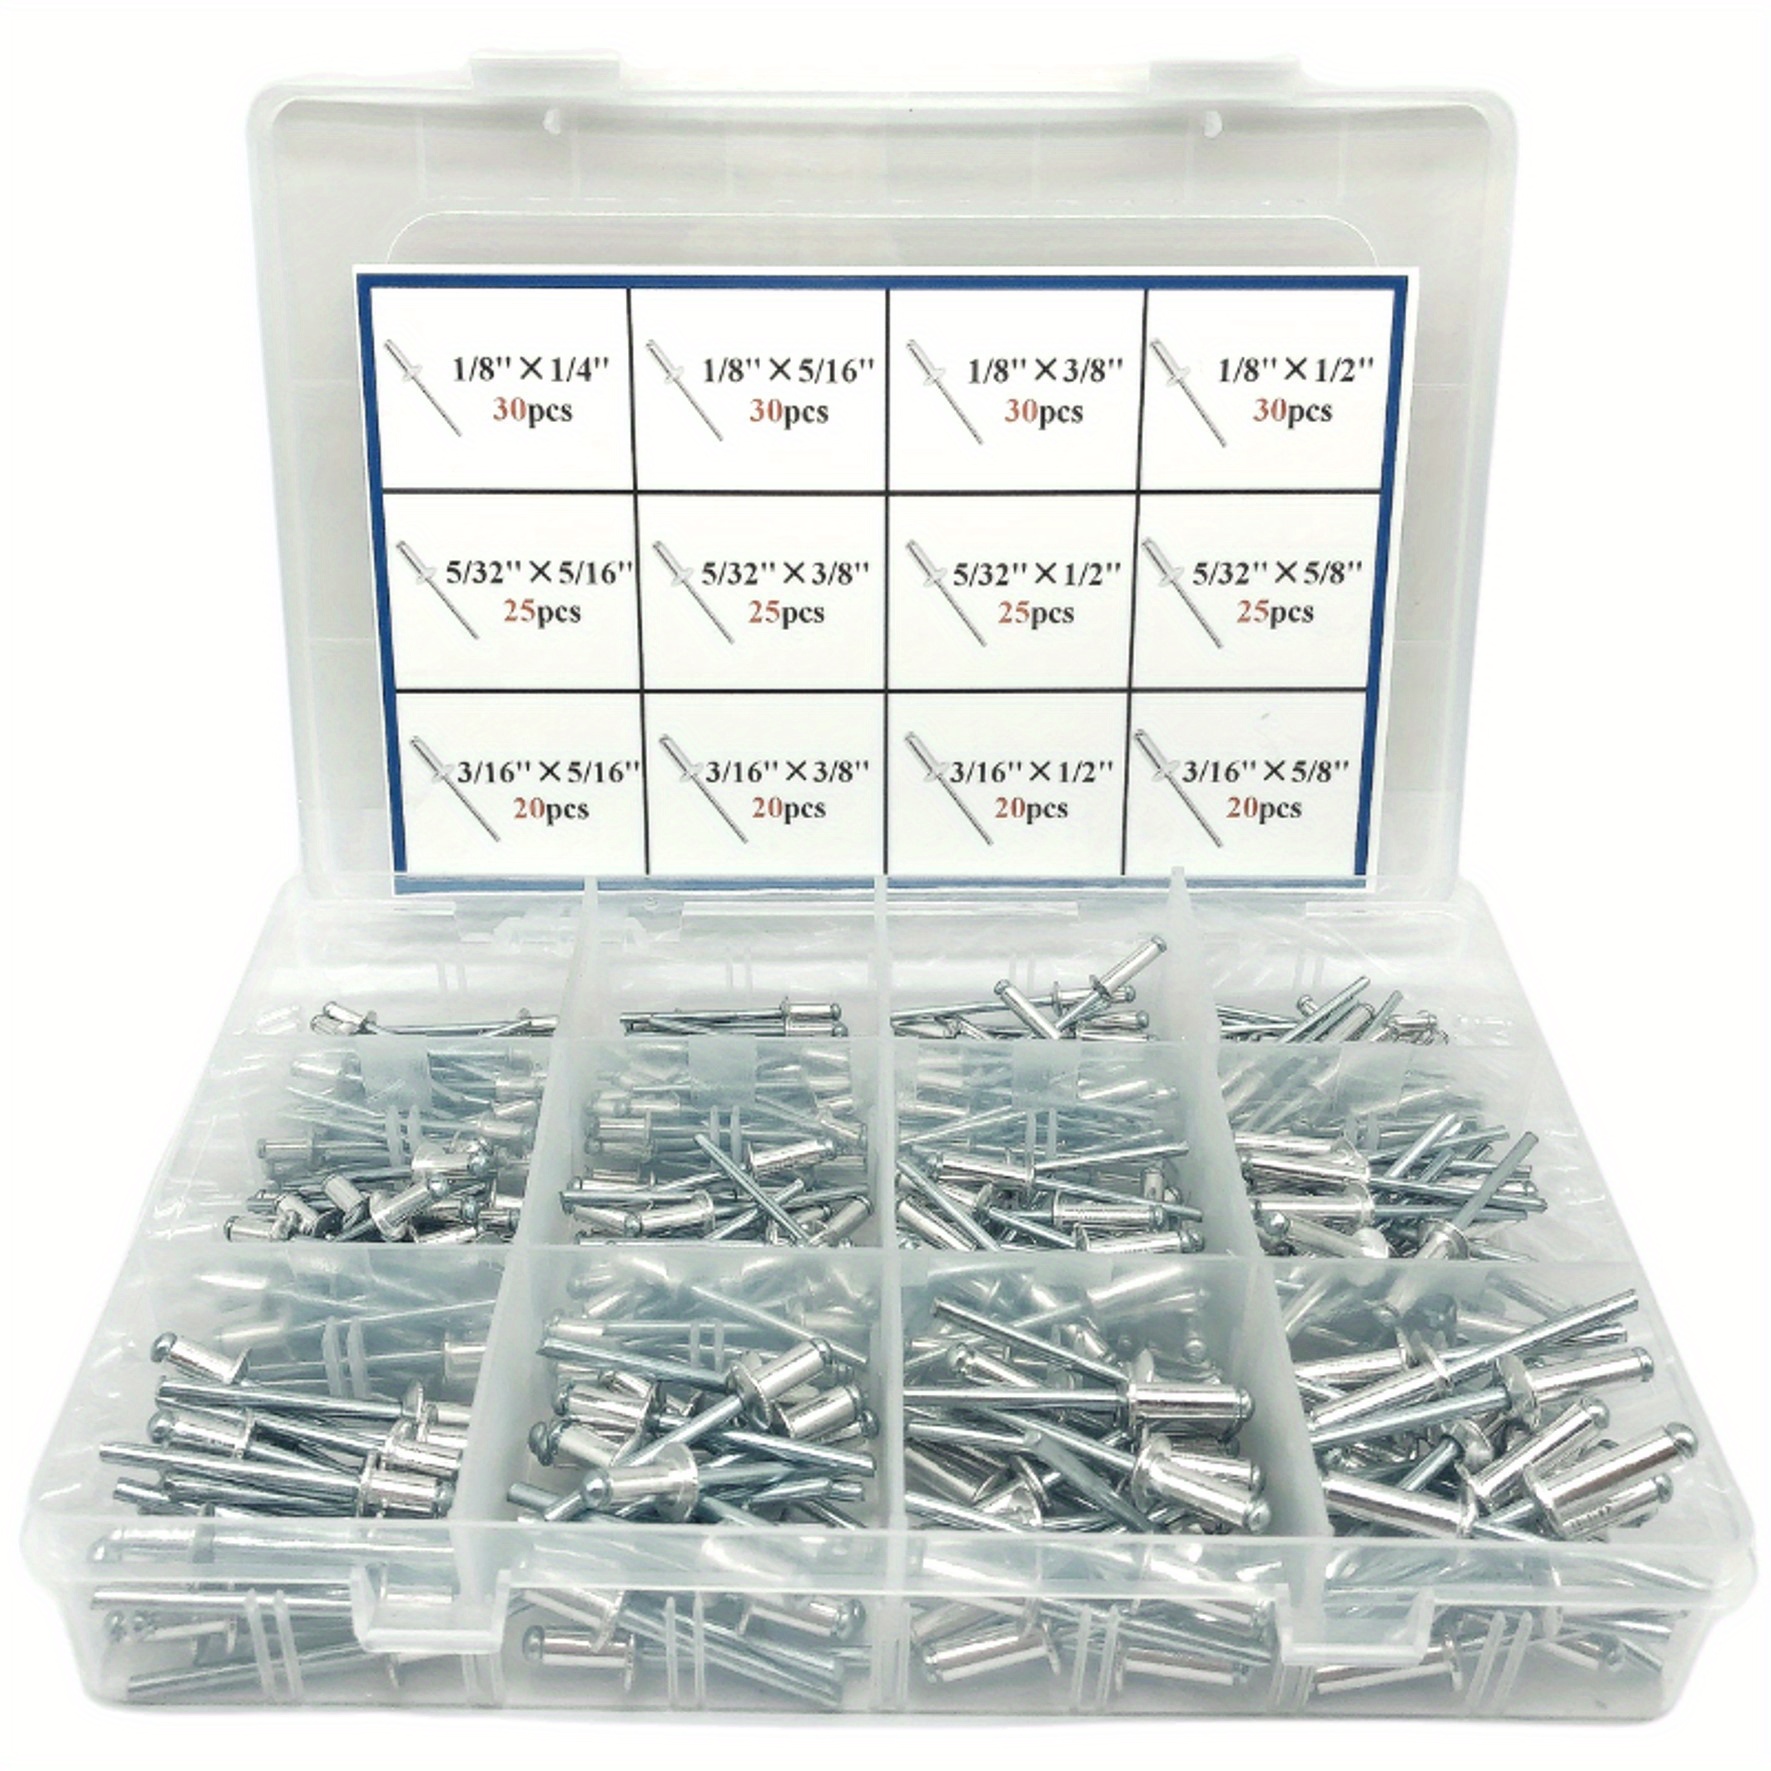 Pop Blind Rivets, 400PCS Aluminum Pop Rivets Assortment Kit, 8 Sizes Rivets  (3mm/5mm), Silver Rivets Assorted with Reinforced Divider & Labeled Case